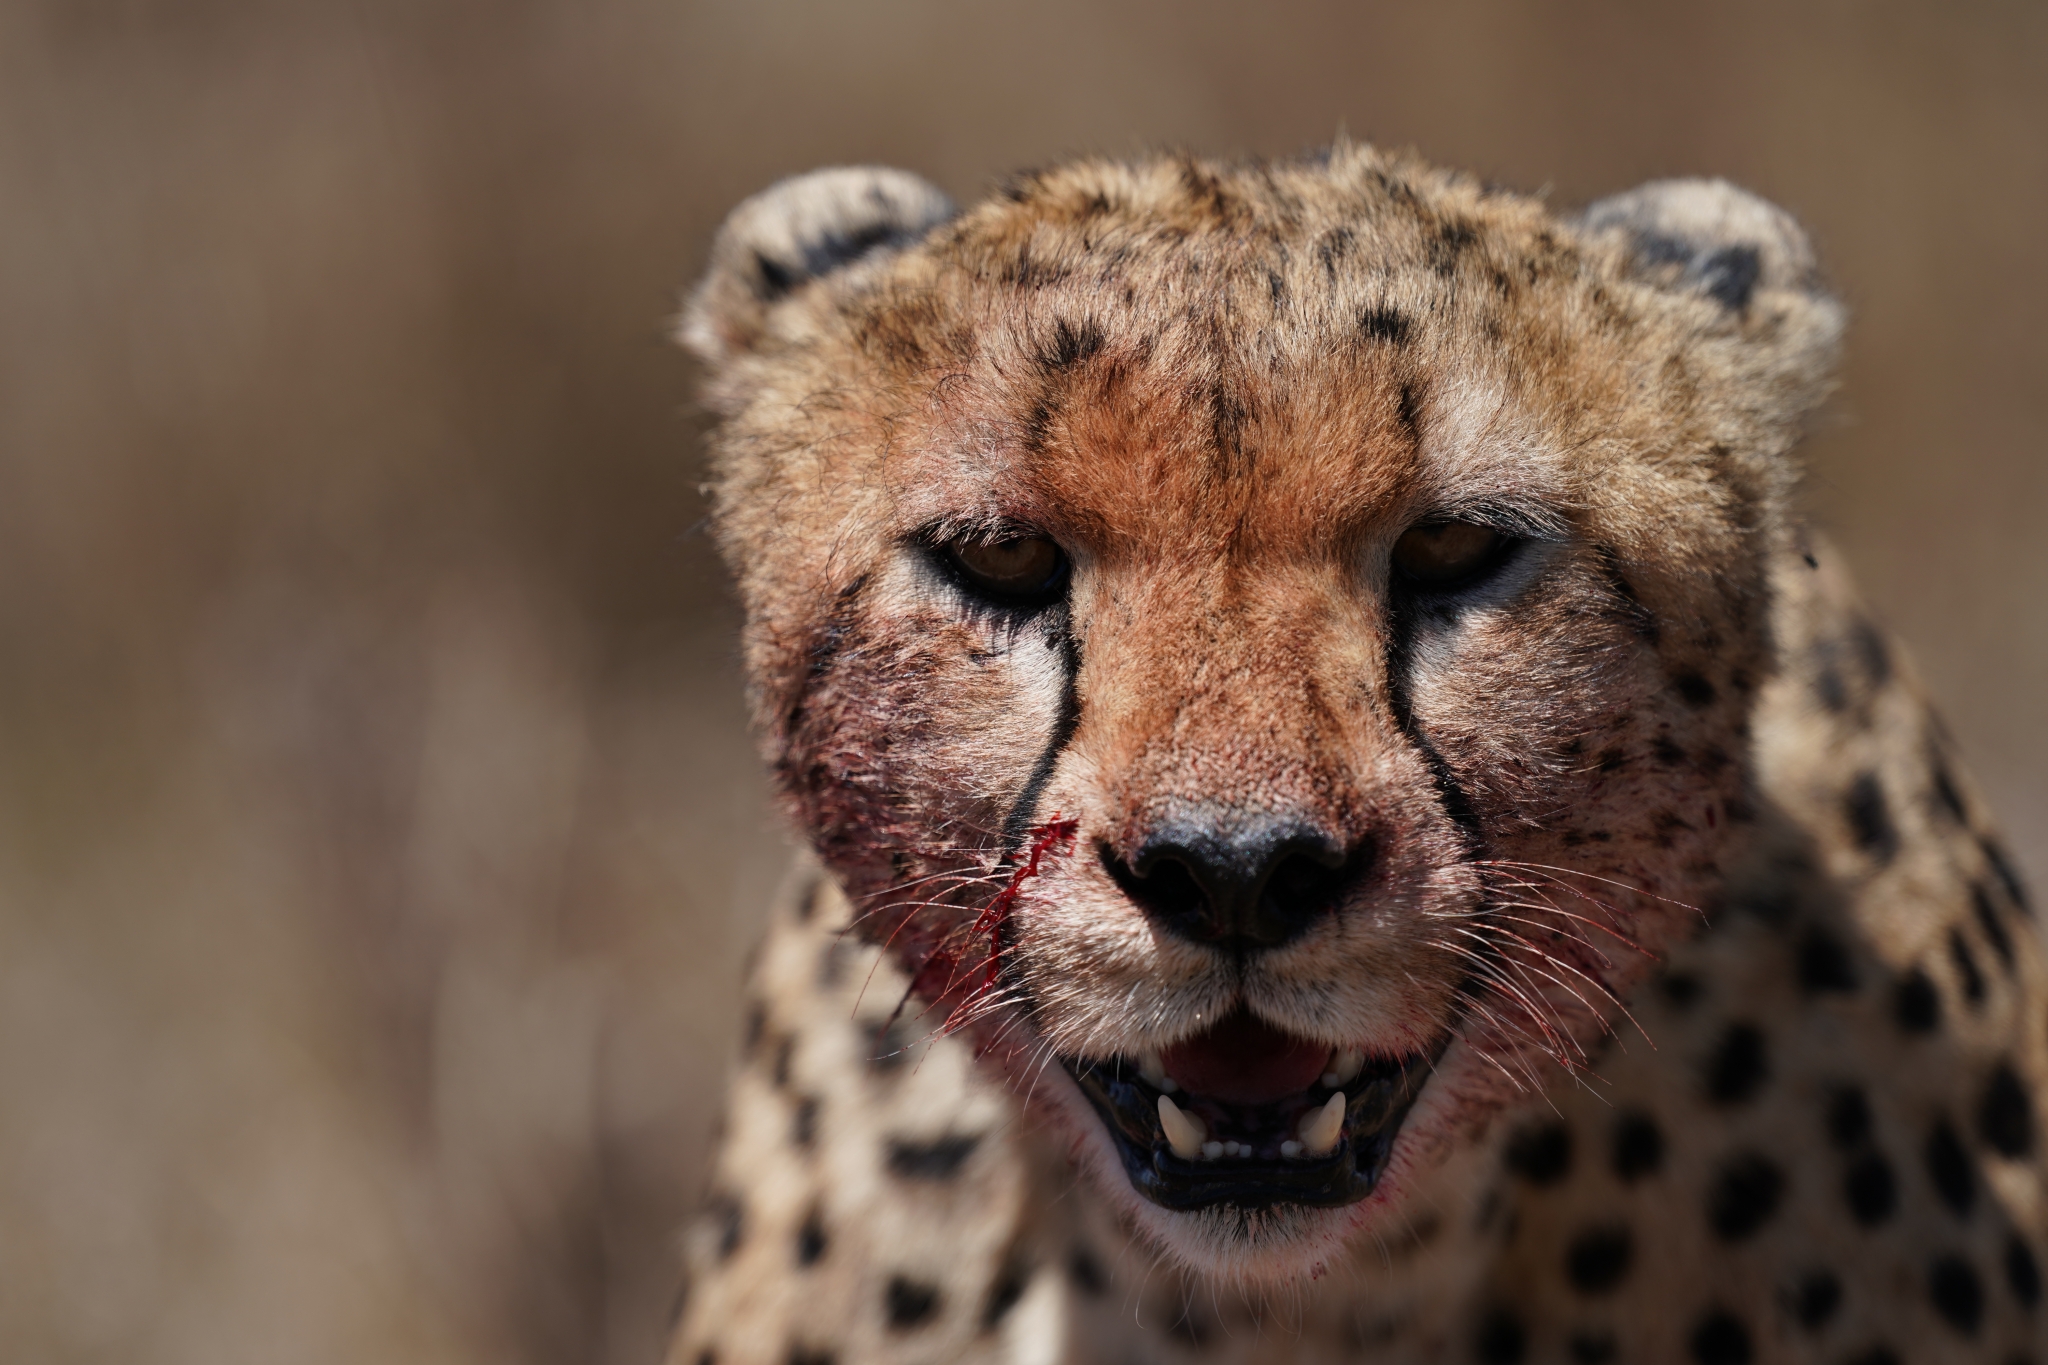 Close-up of a cheetah's face